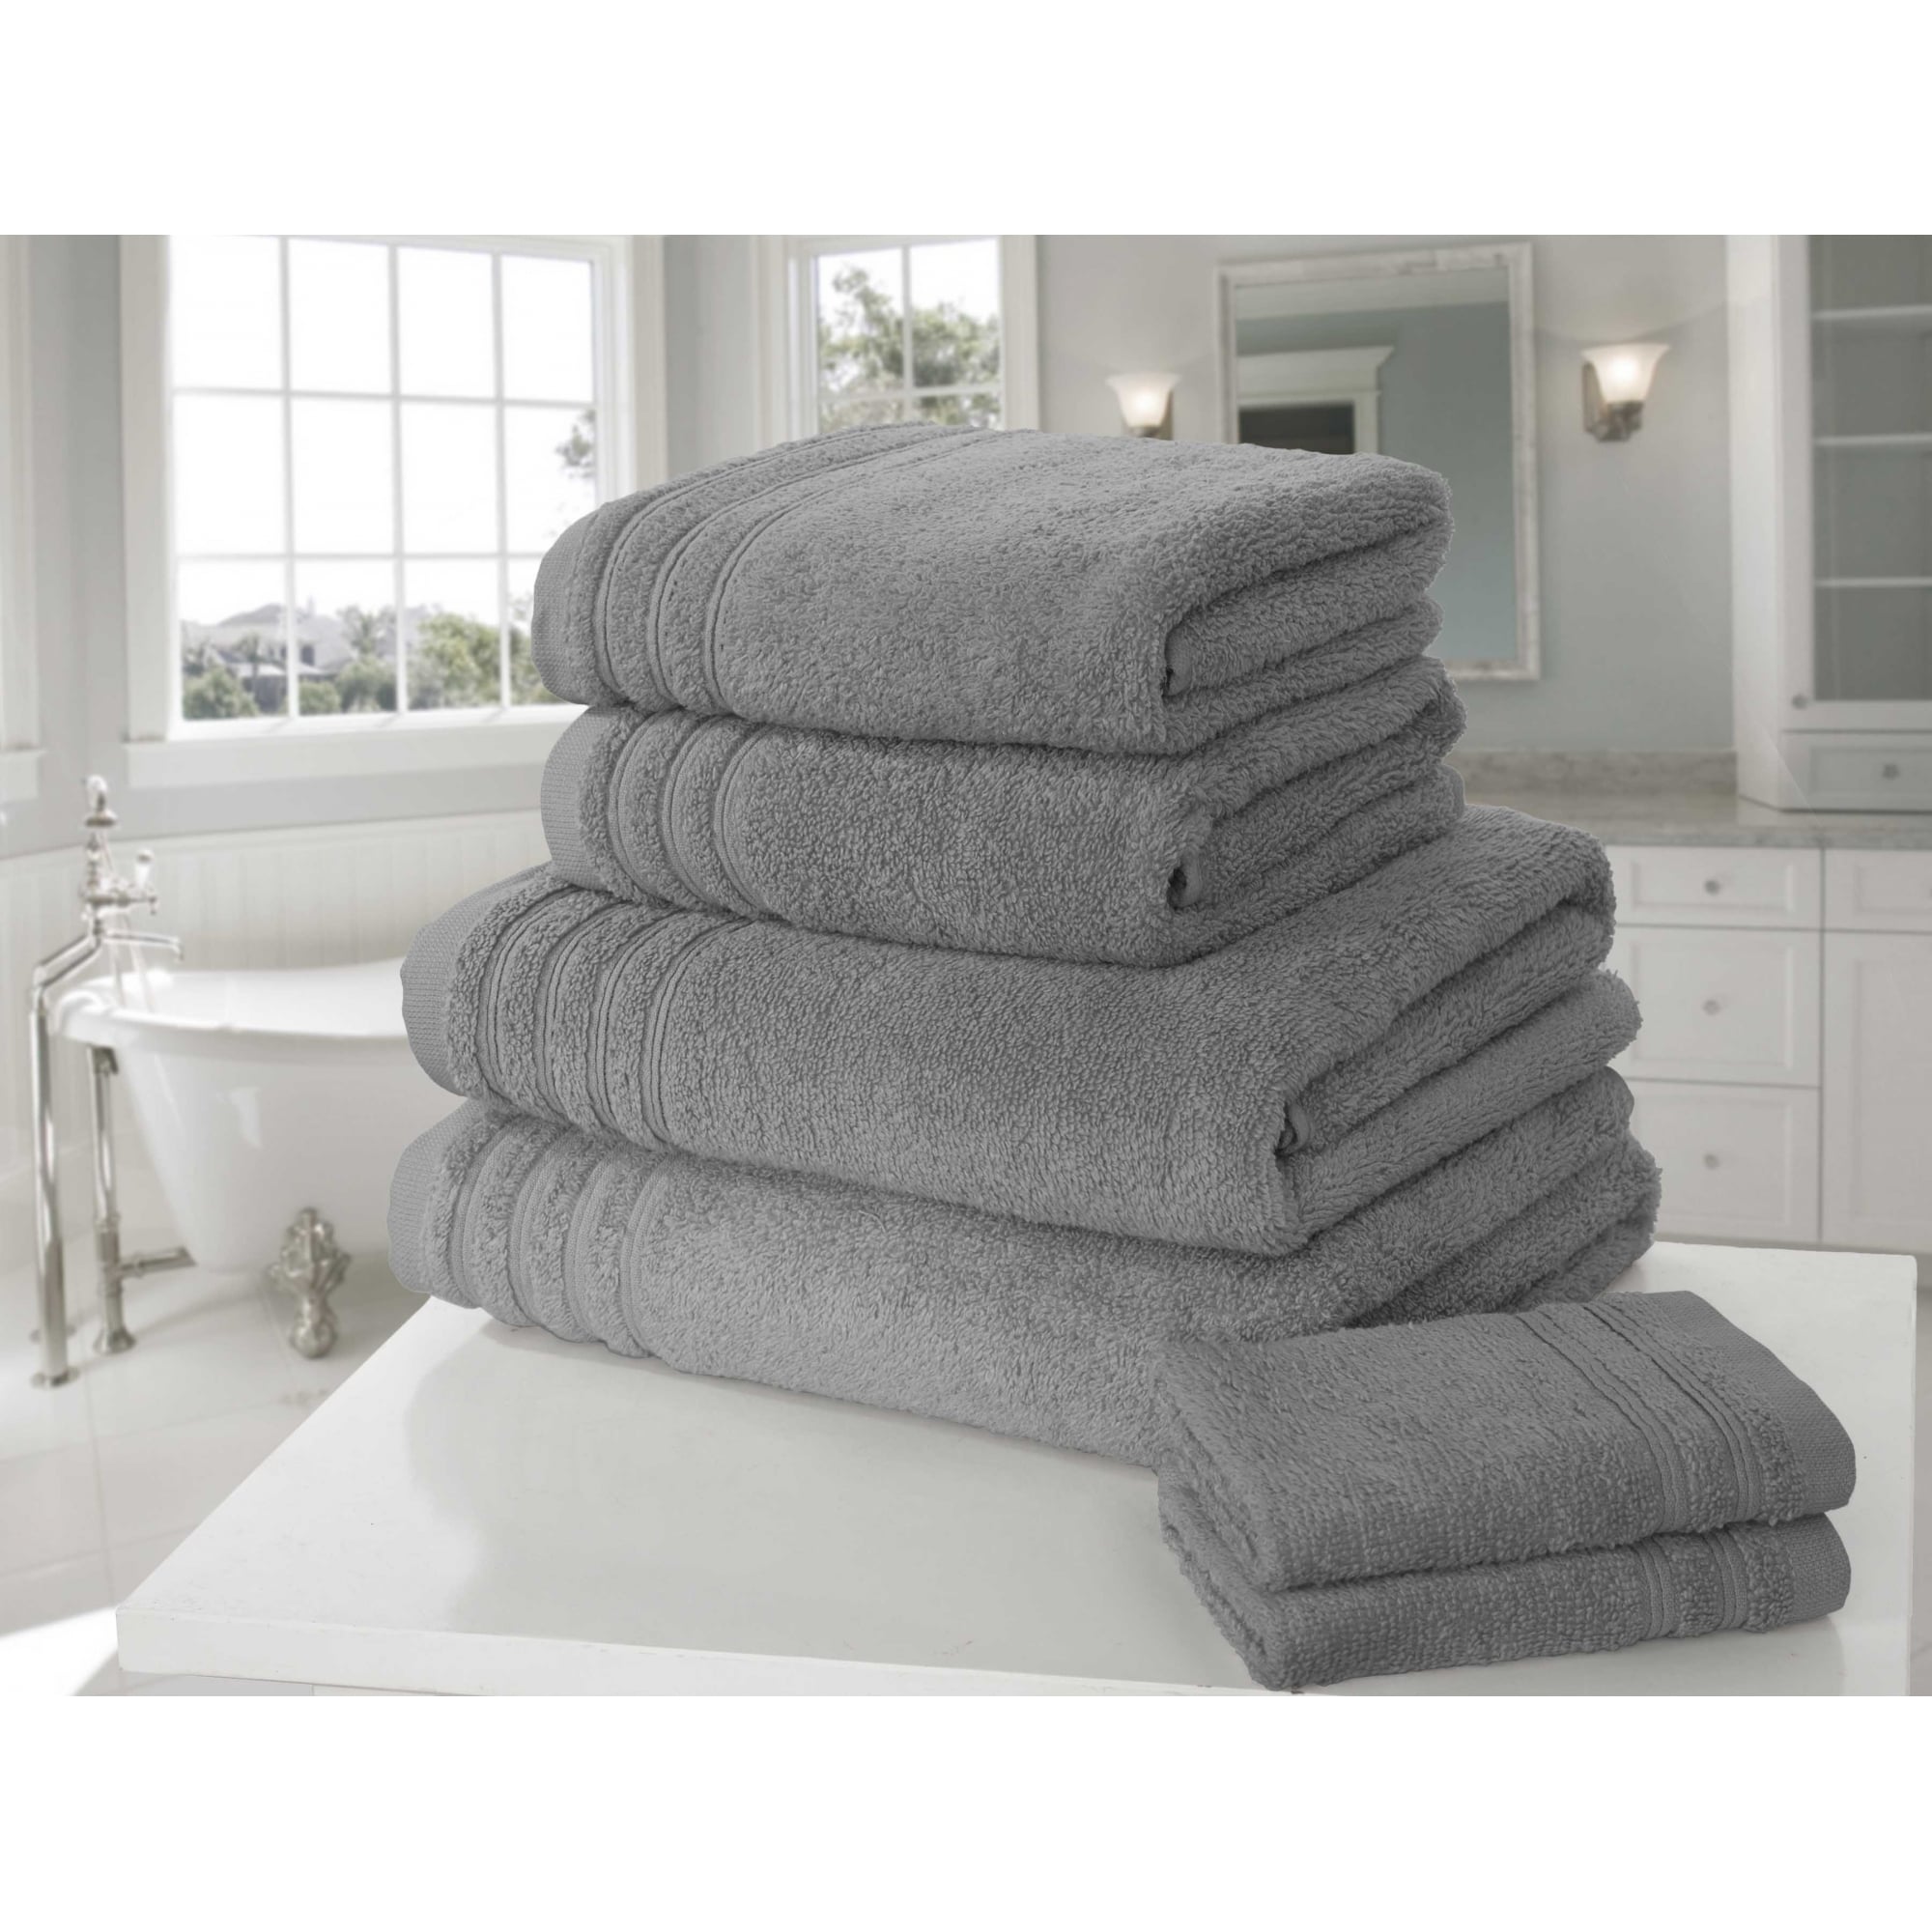 Lewis’s  So Soft Zero Twist Towel Range - Charcoal - Bath Sheet  | TJ Hughes